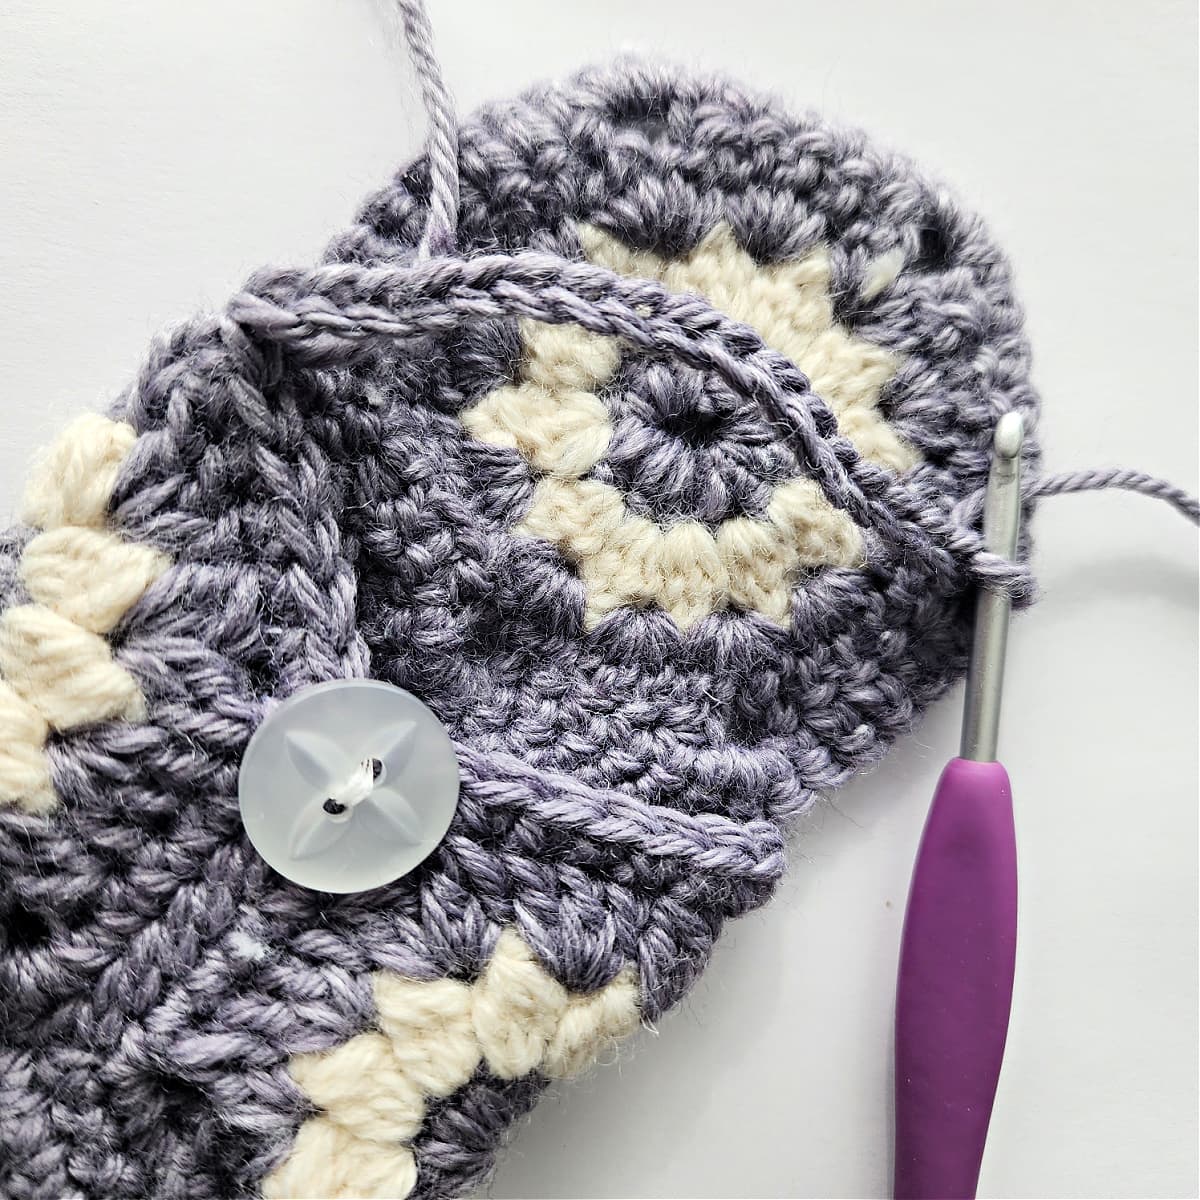 Crochet chain created as a closer for eye glass case.